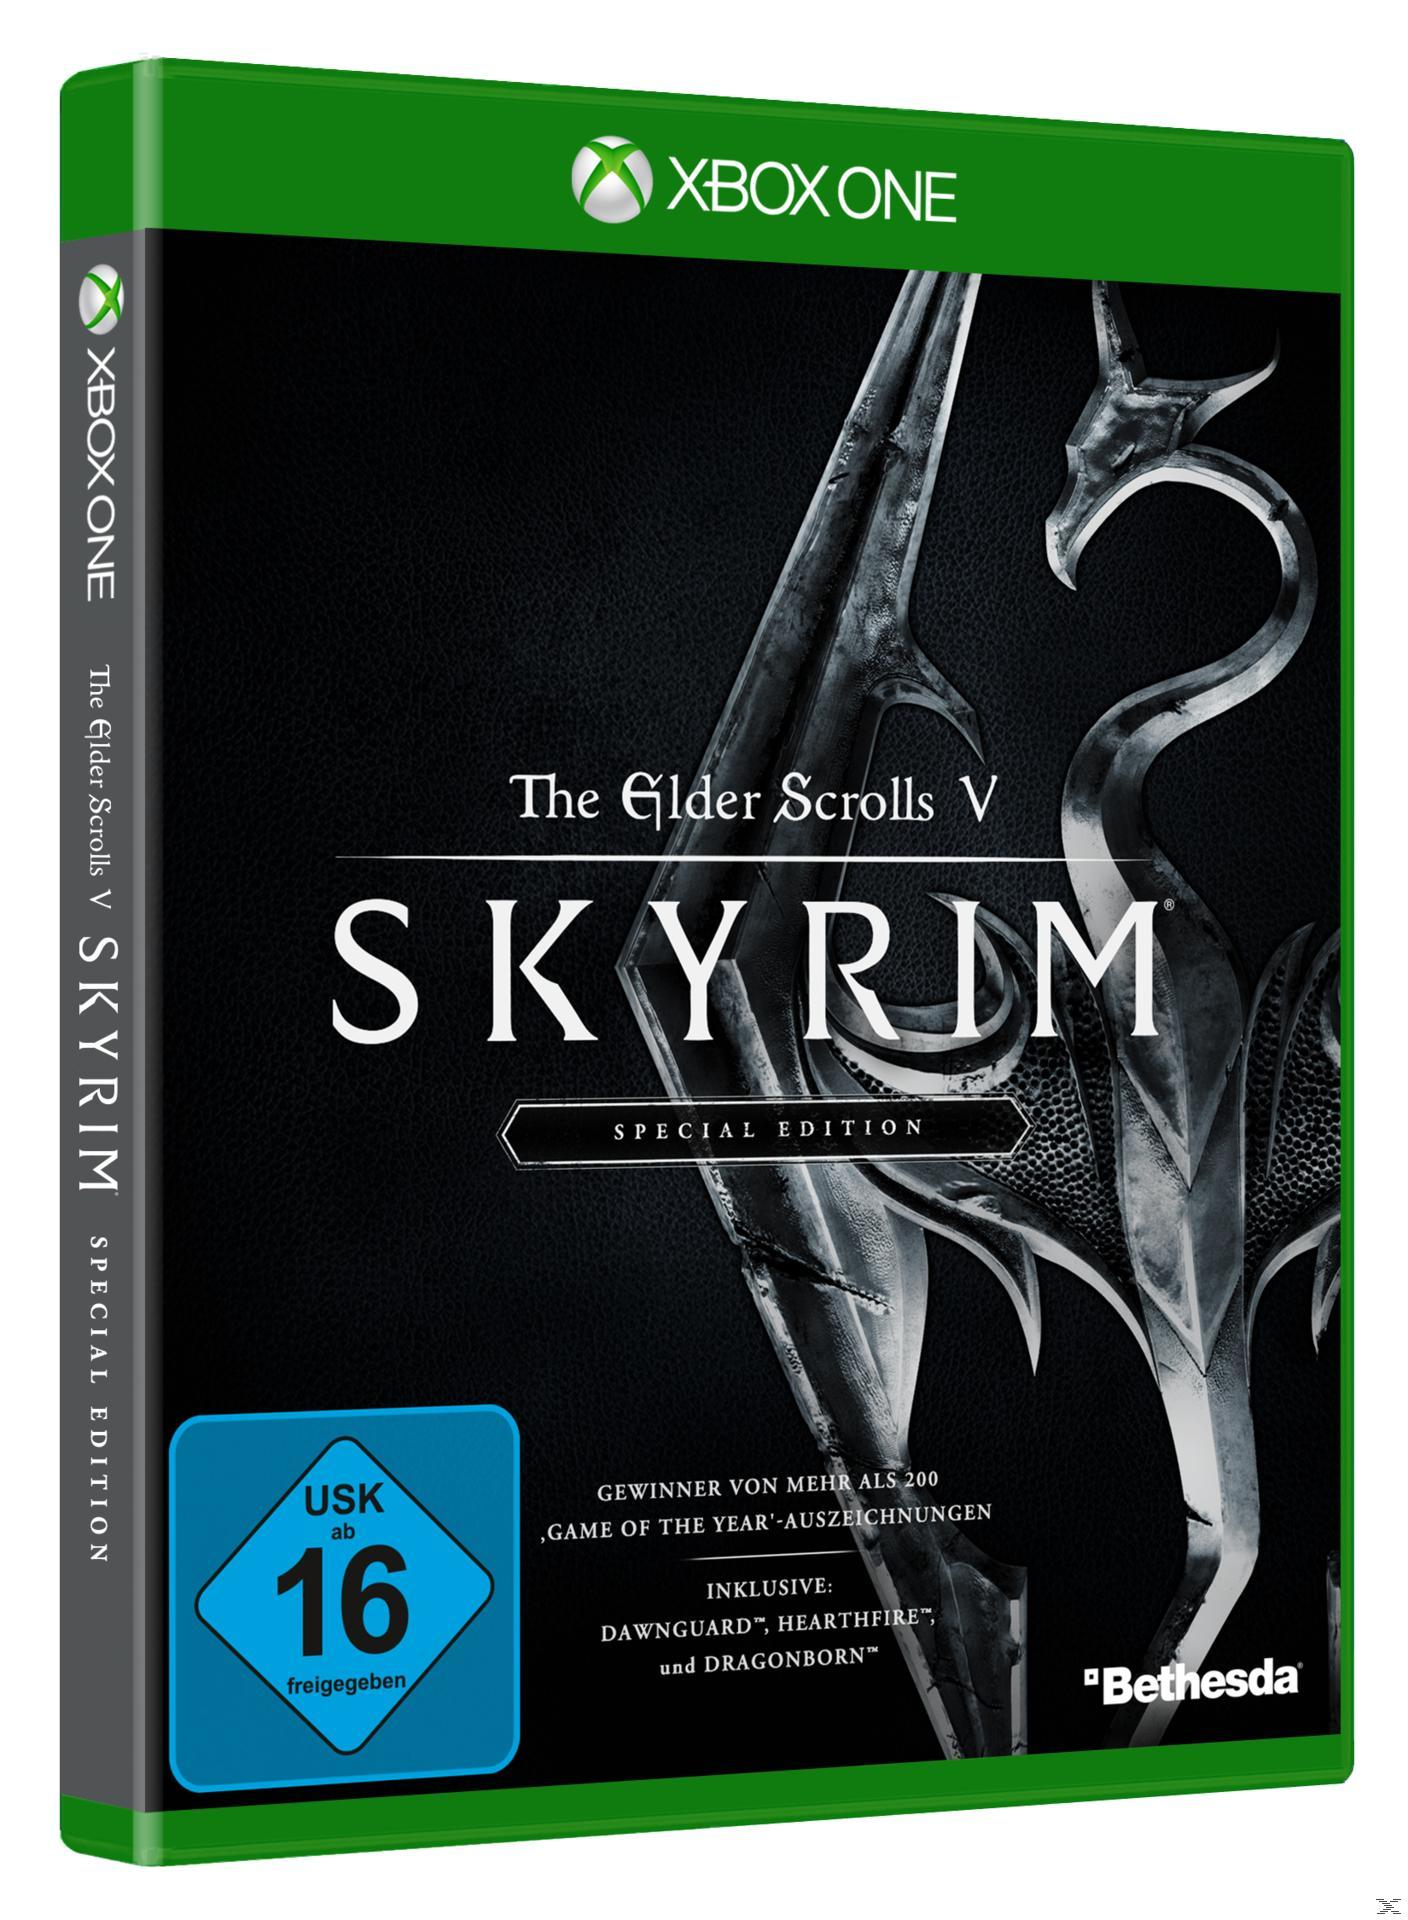 The Elder Edition Special [Xbox - - One] V: Skyrim Scrolls